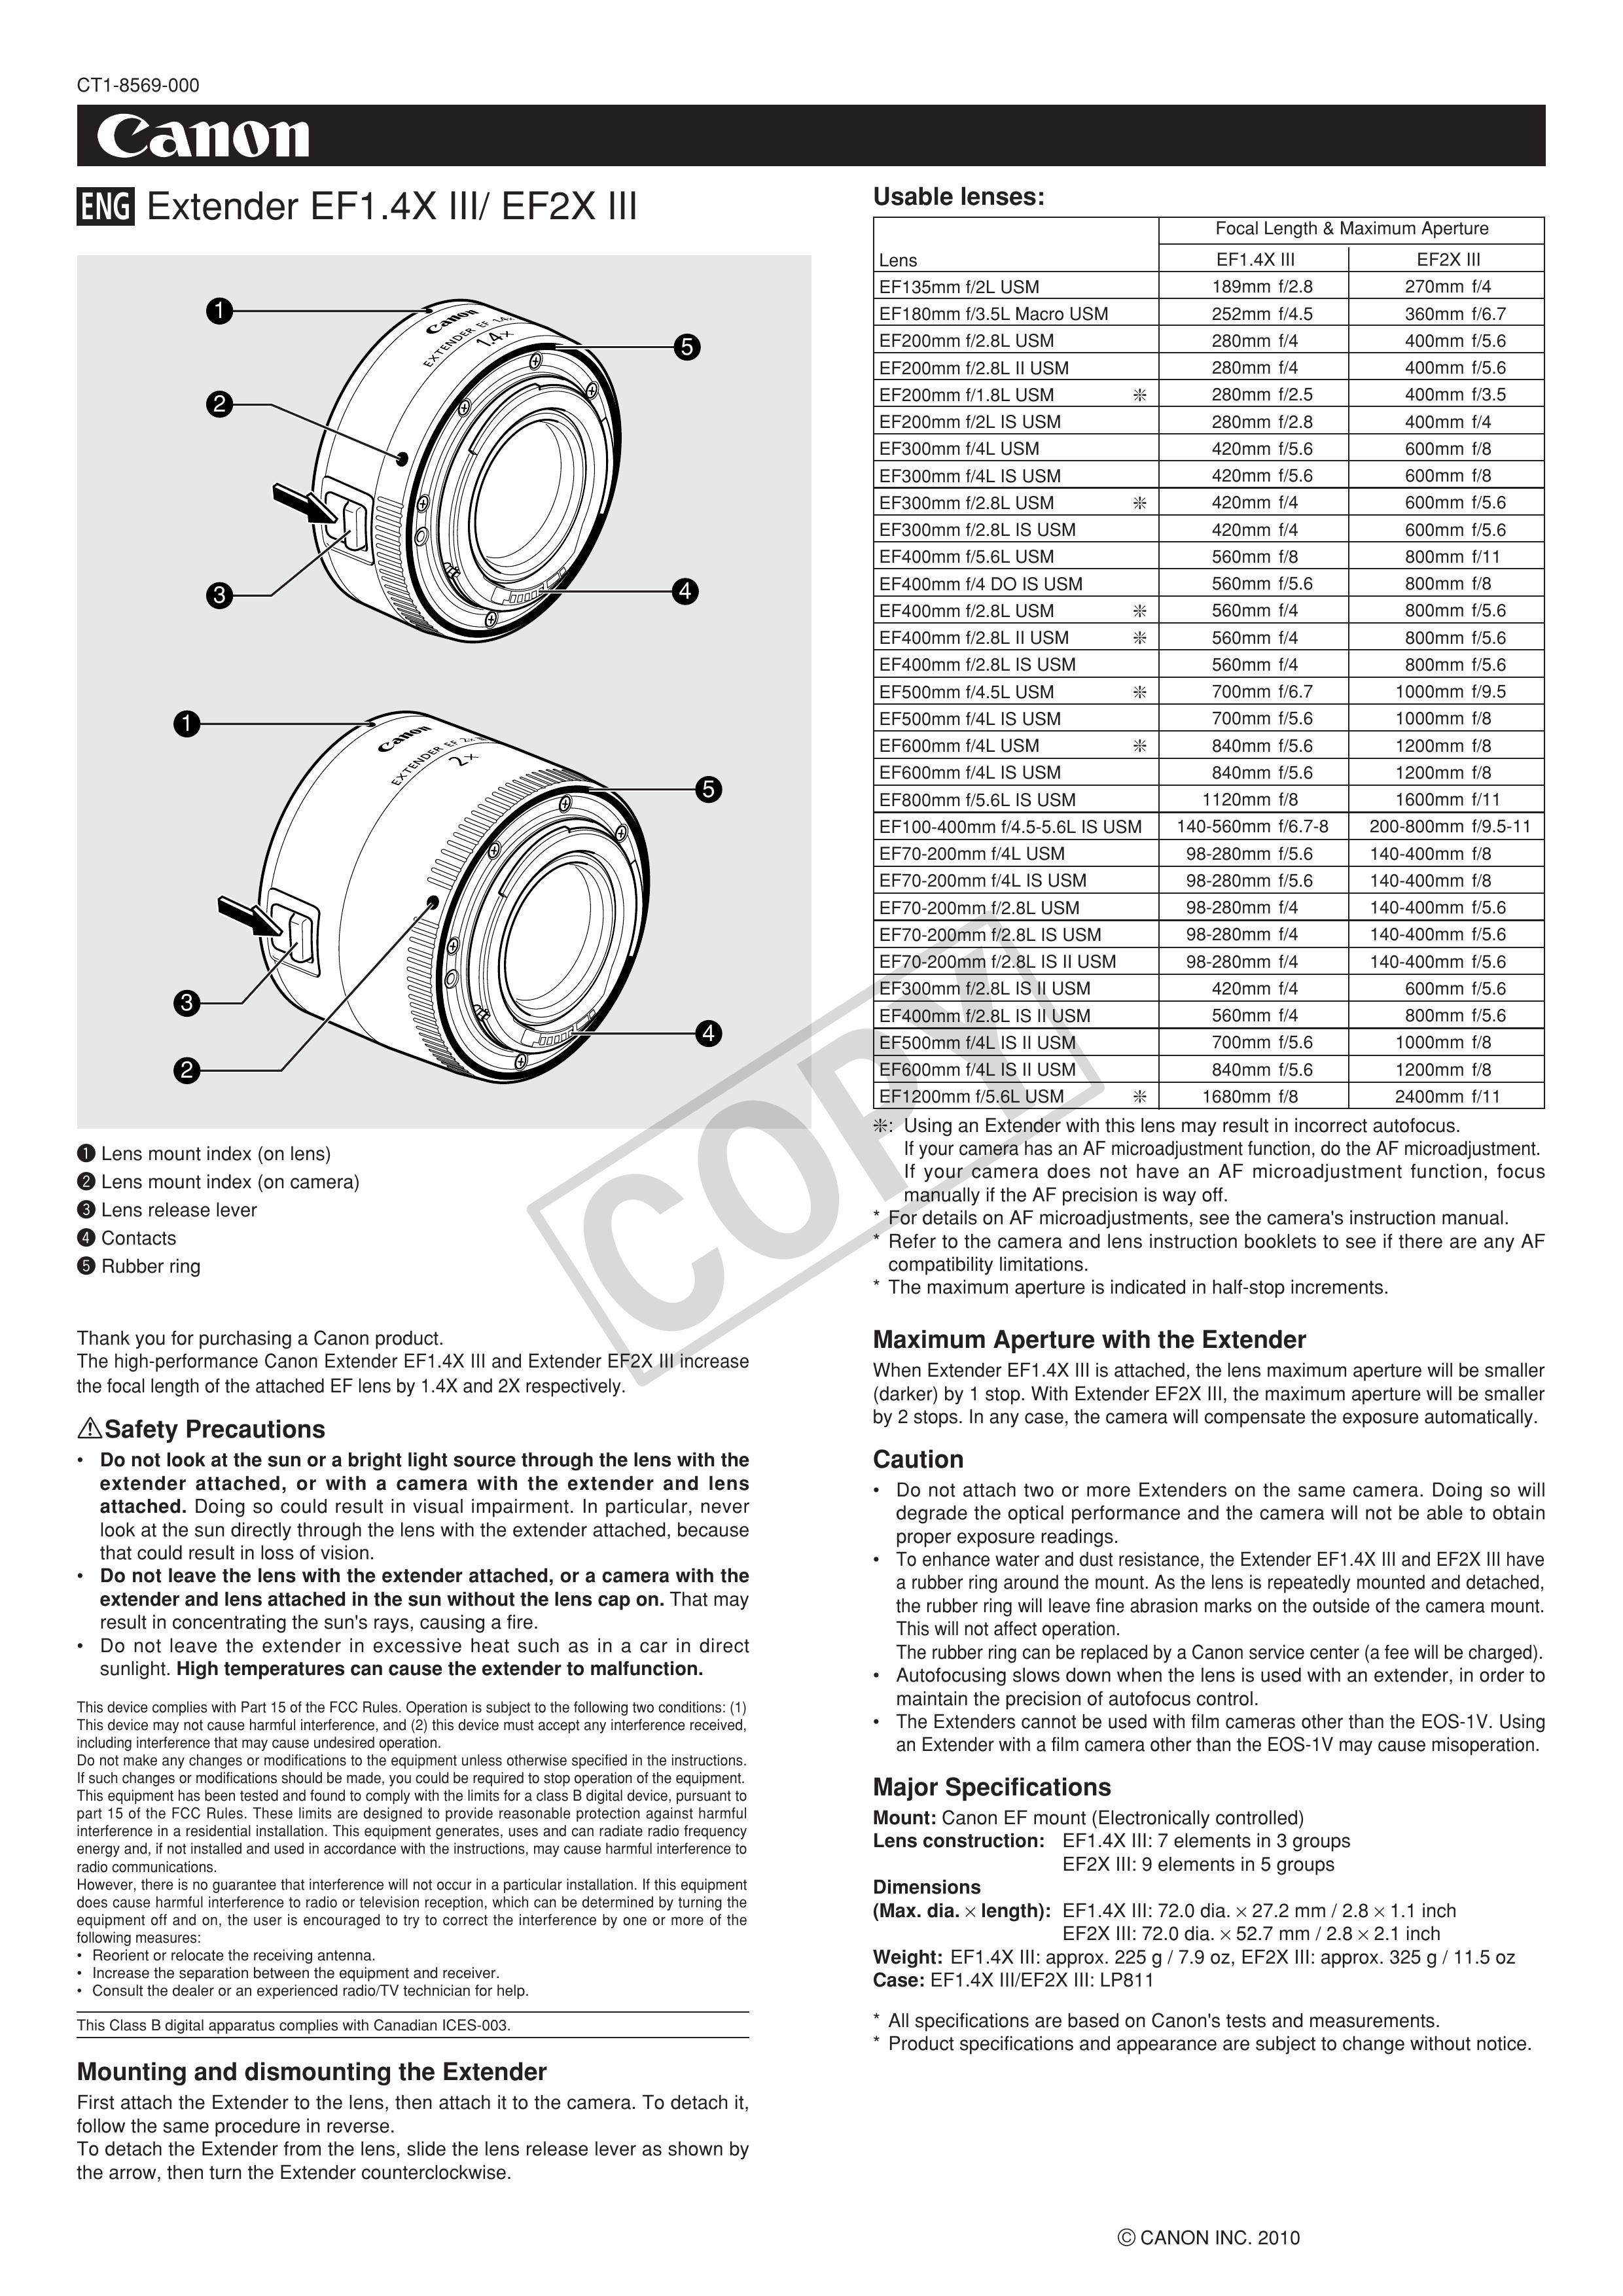 Canon EF 1.4X III Camera Accessories User Manual